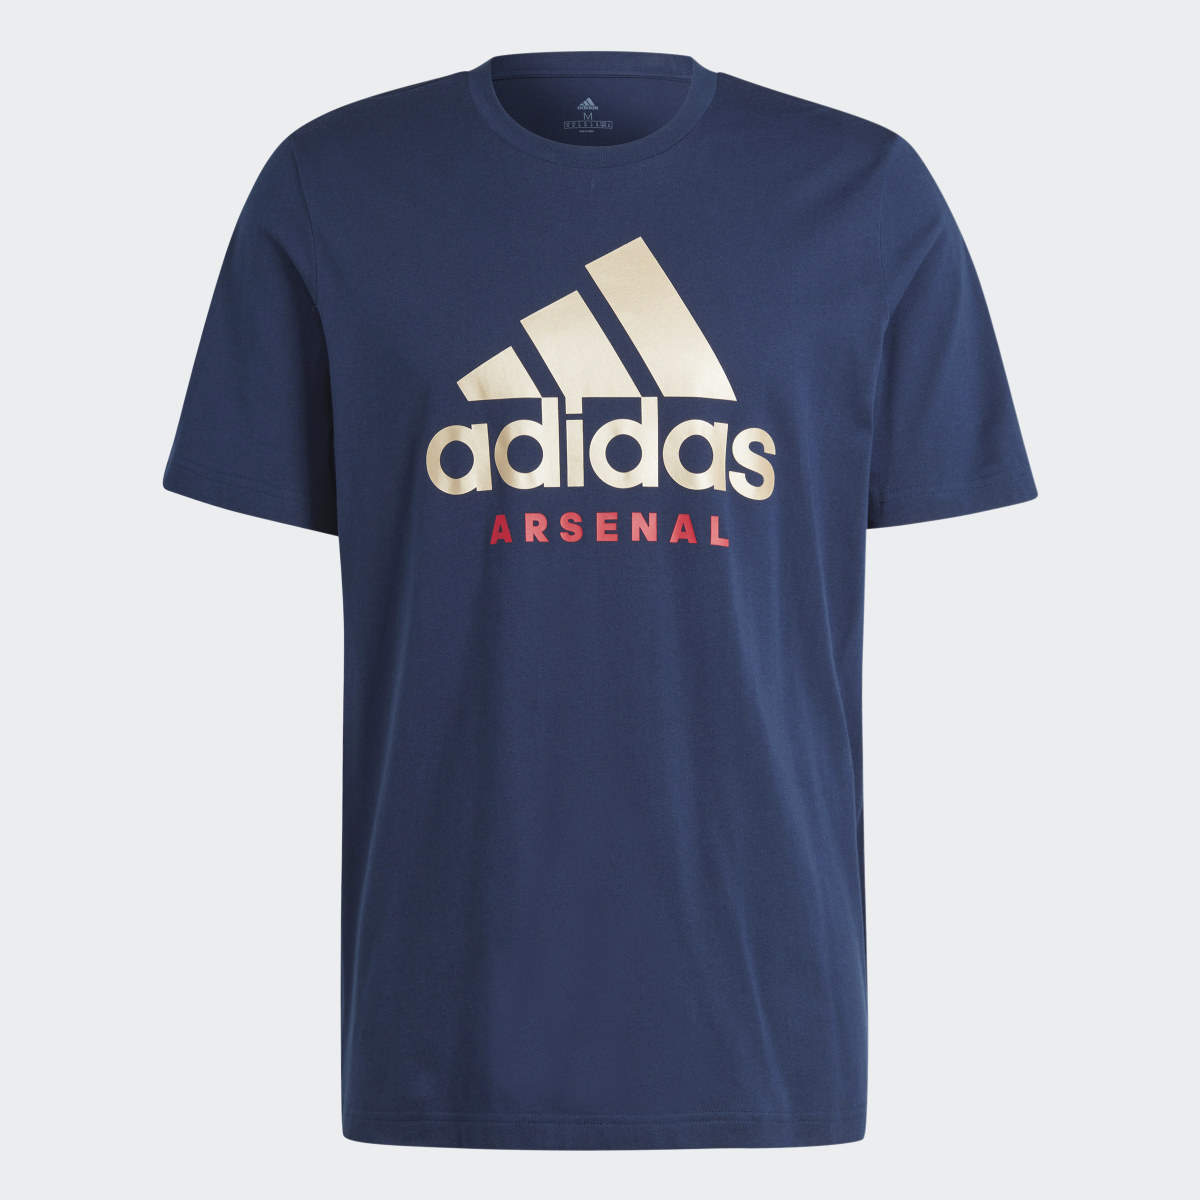 Adidas Camiseta Arsenal Street Graphic. 5